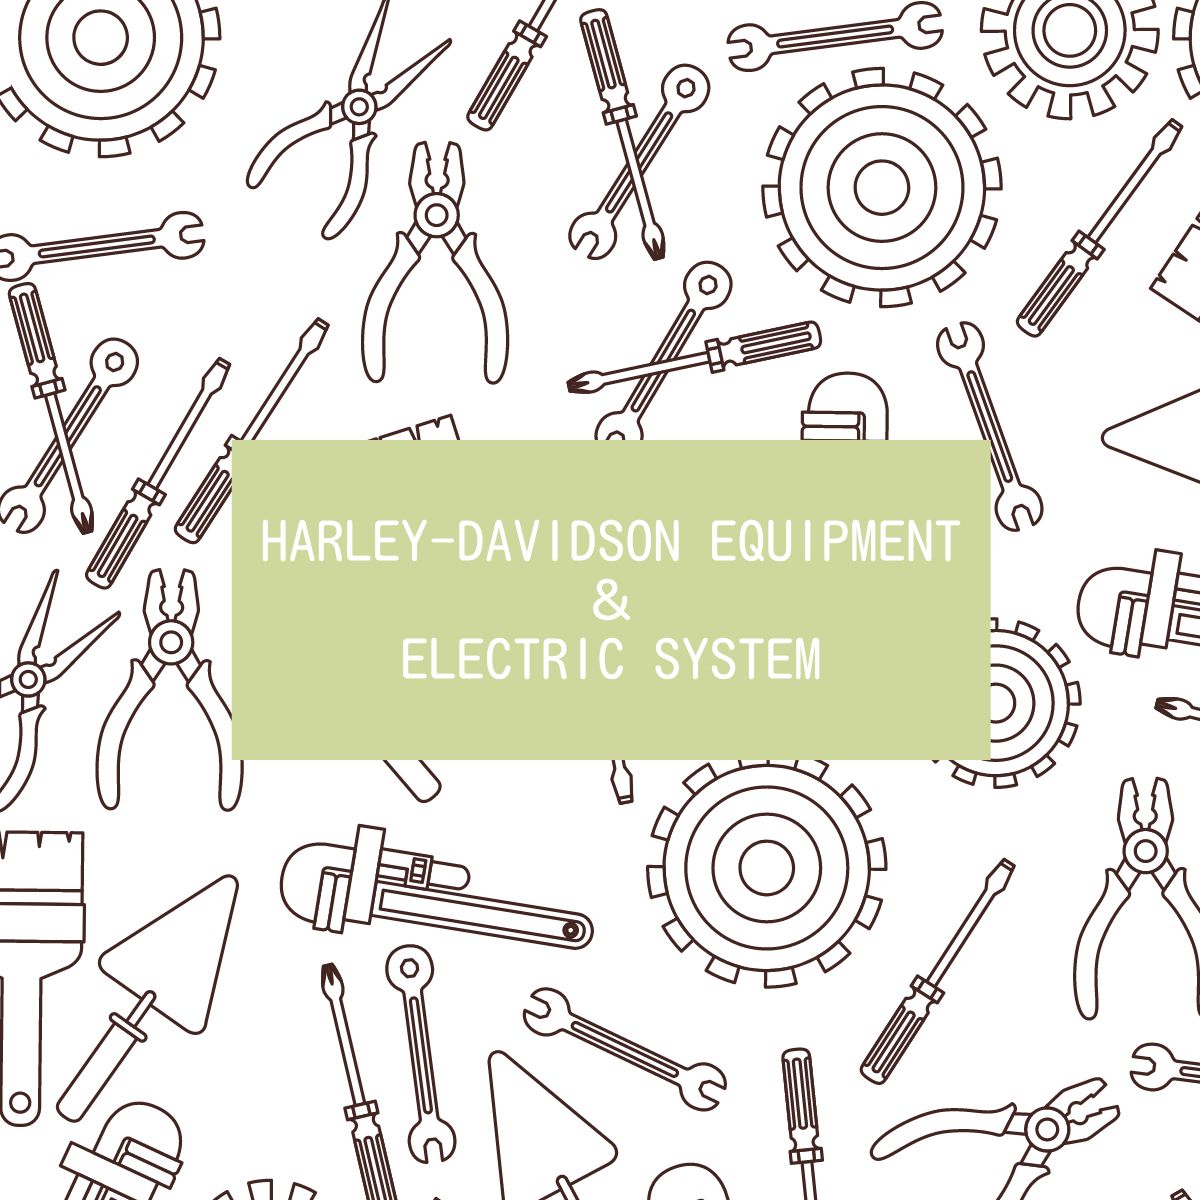 Harley-Davidson Equipment ＆ Electric System